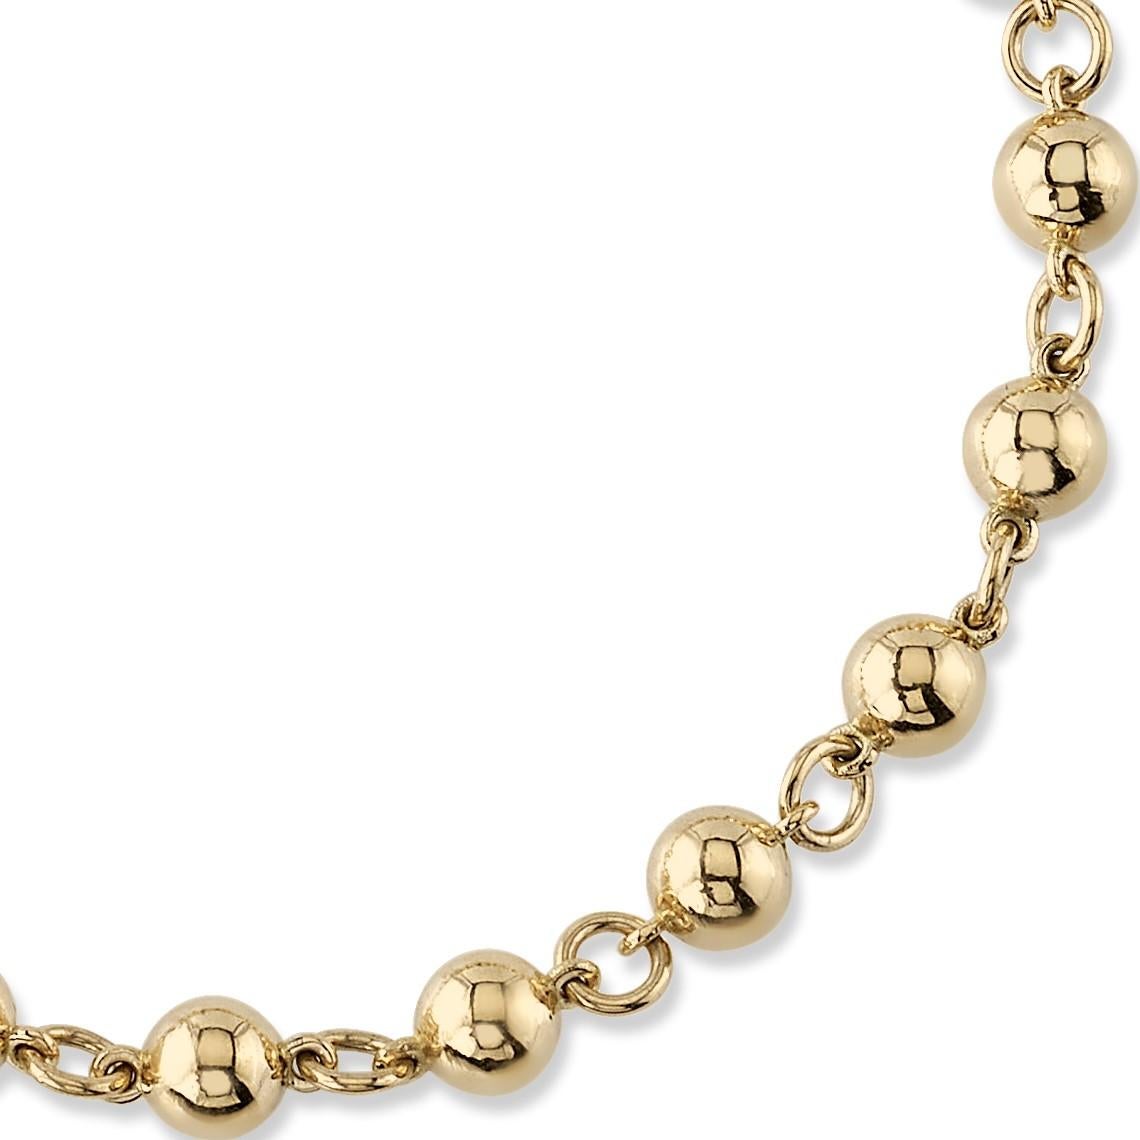 Handcrafted 18K yellow gold large rosary bead bracelet. Beads measure 5mm in diameter.

Bracelet measures 7.5